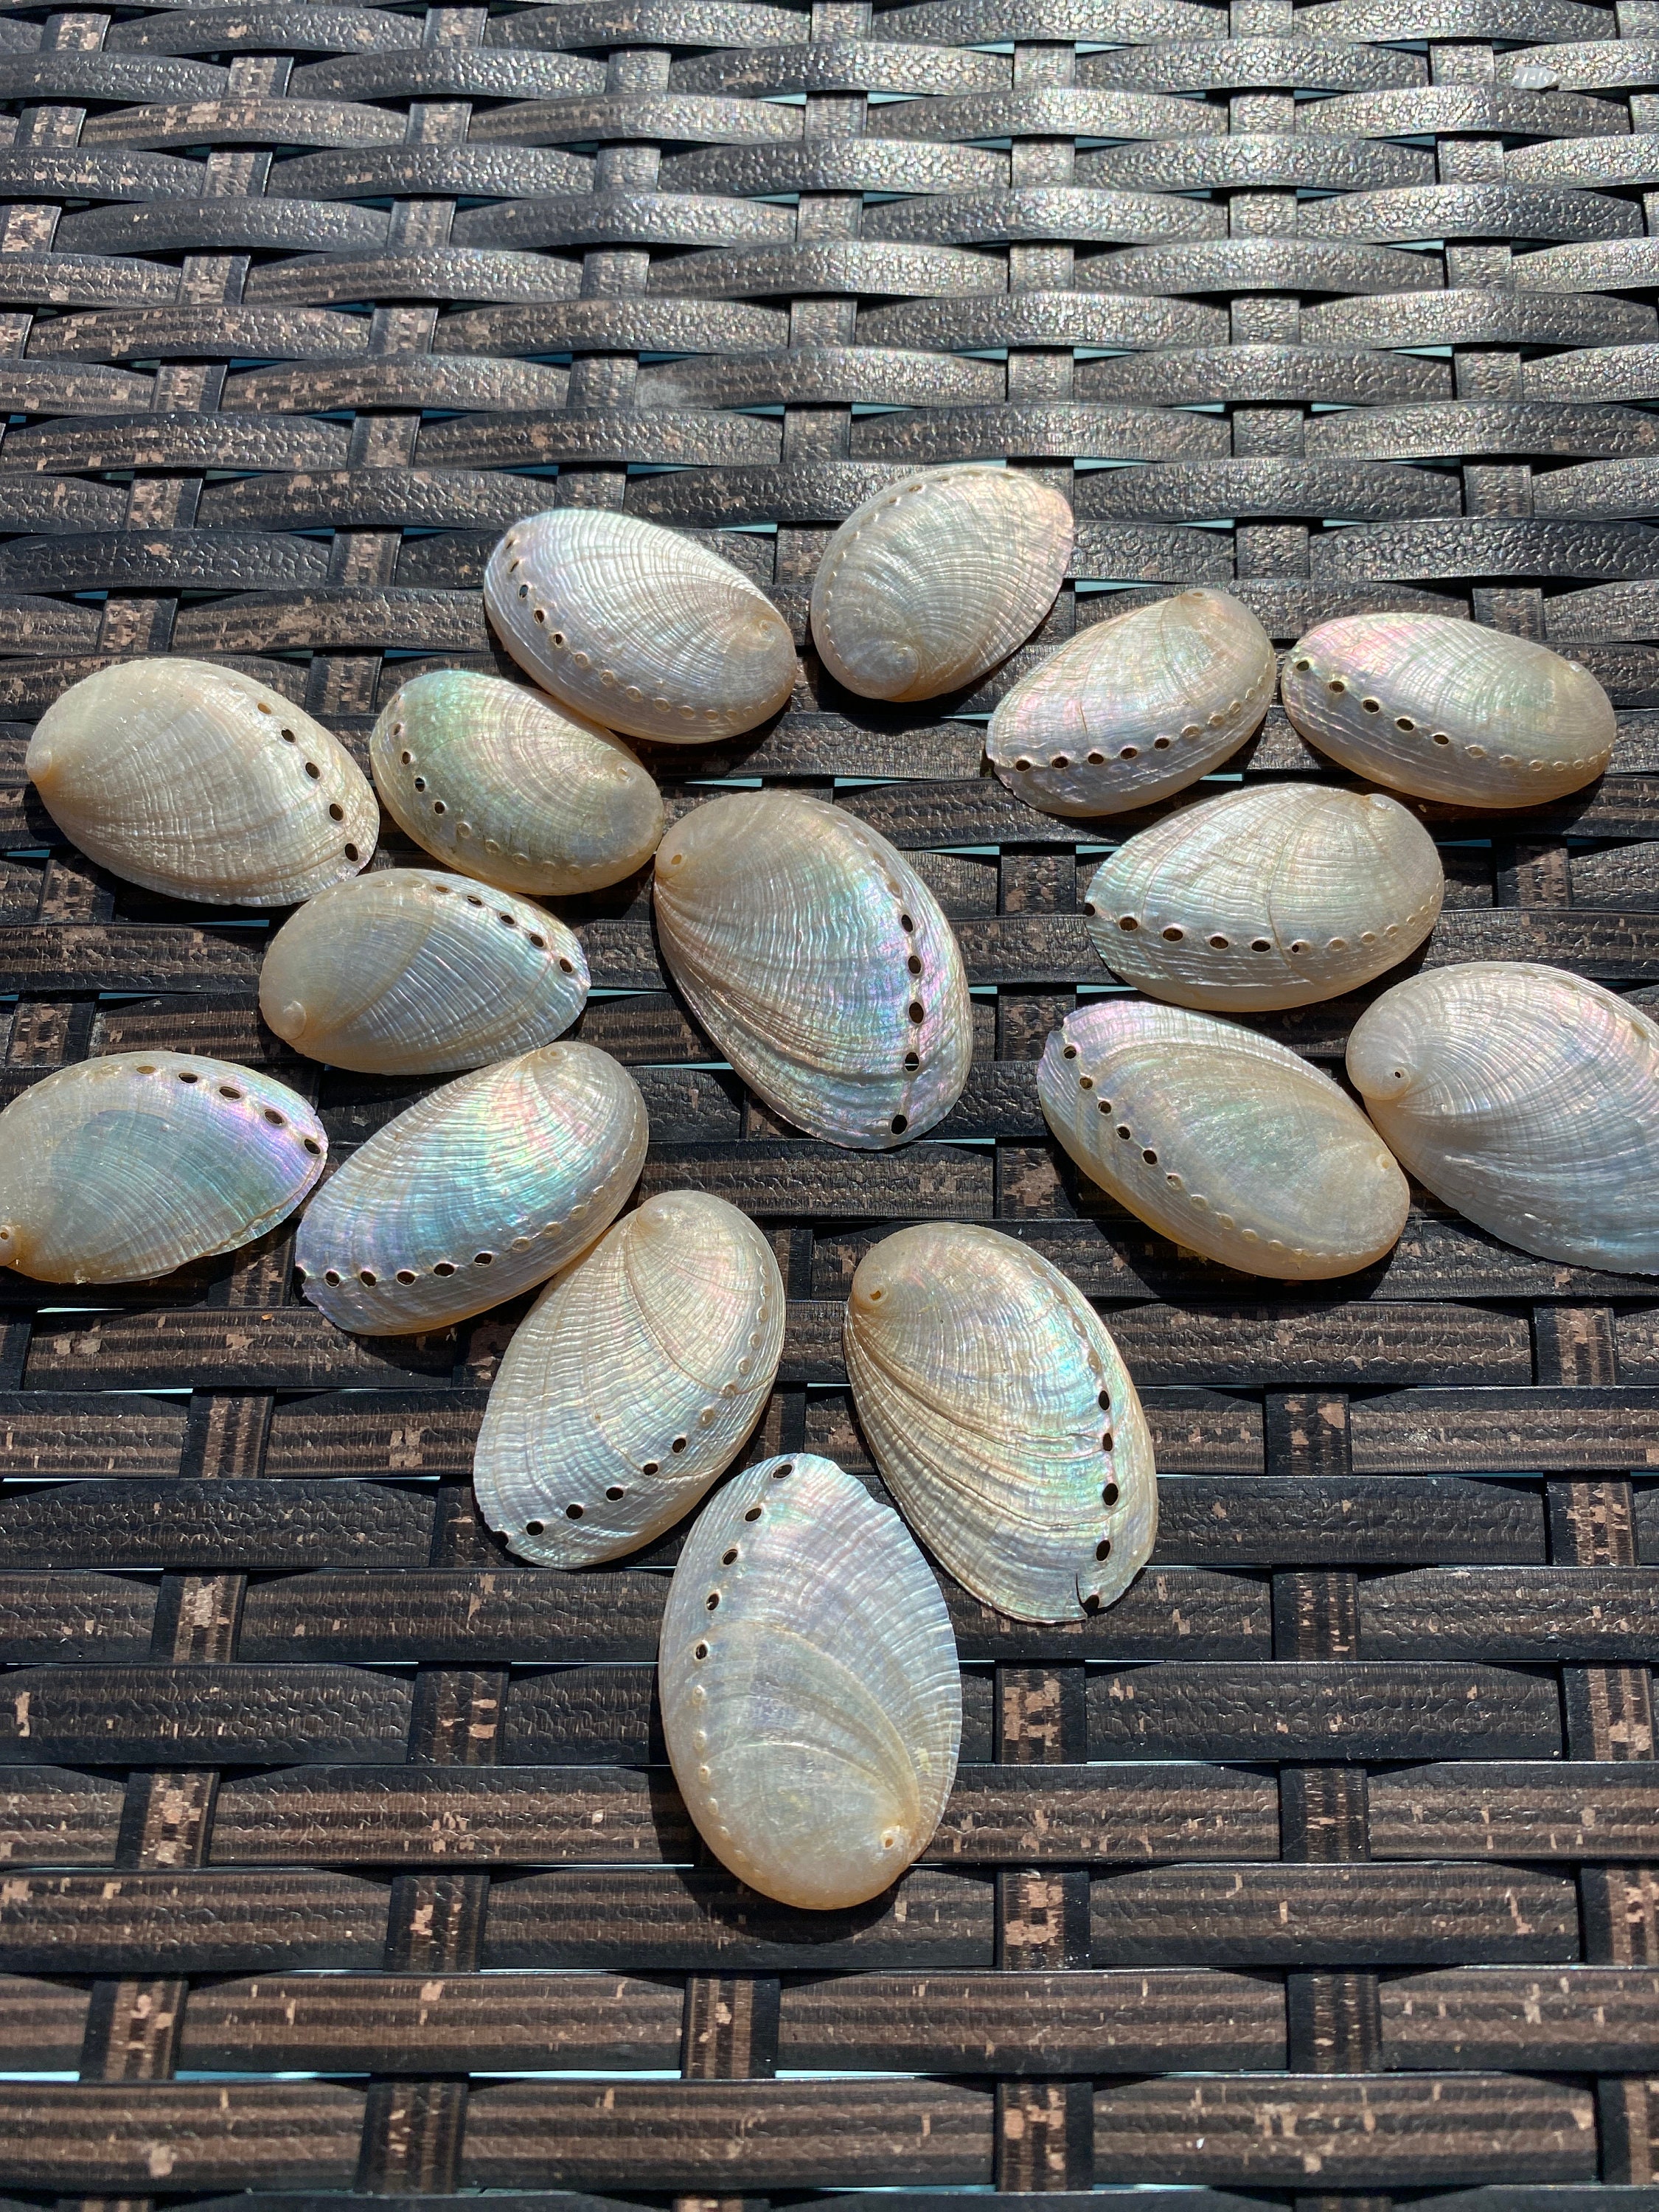 100 Pearl Abalone Shells 1 1/2" To 2" Haliotis Asinina Donkey's Ear Seashells 